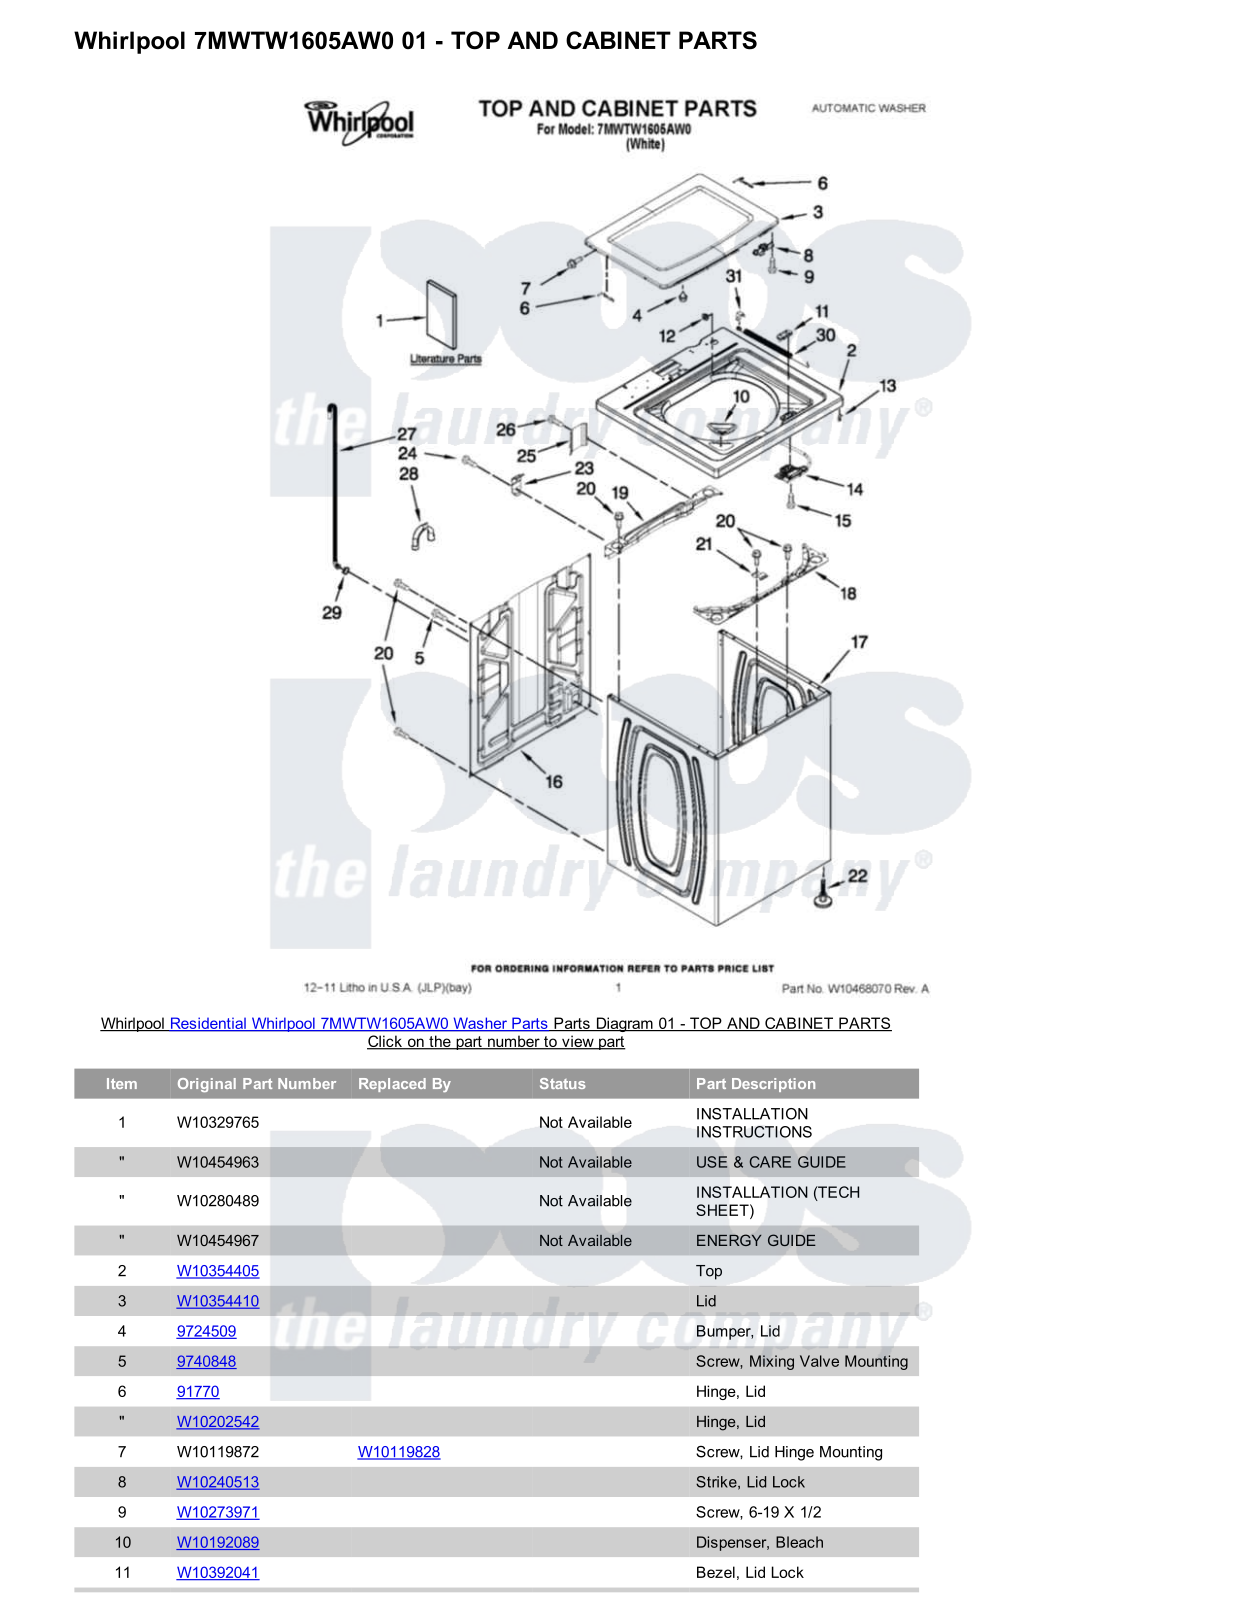 Whirlpool 7MWTW1605AW0 Parts Diagram